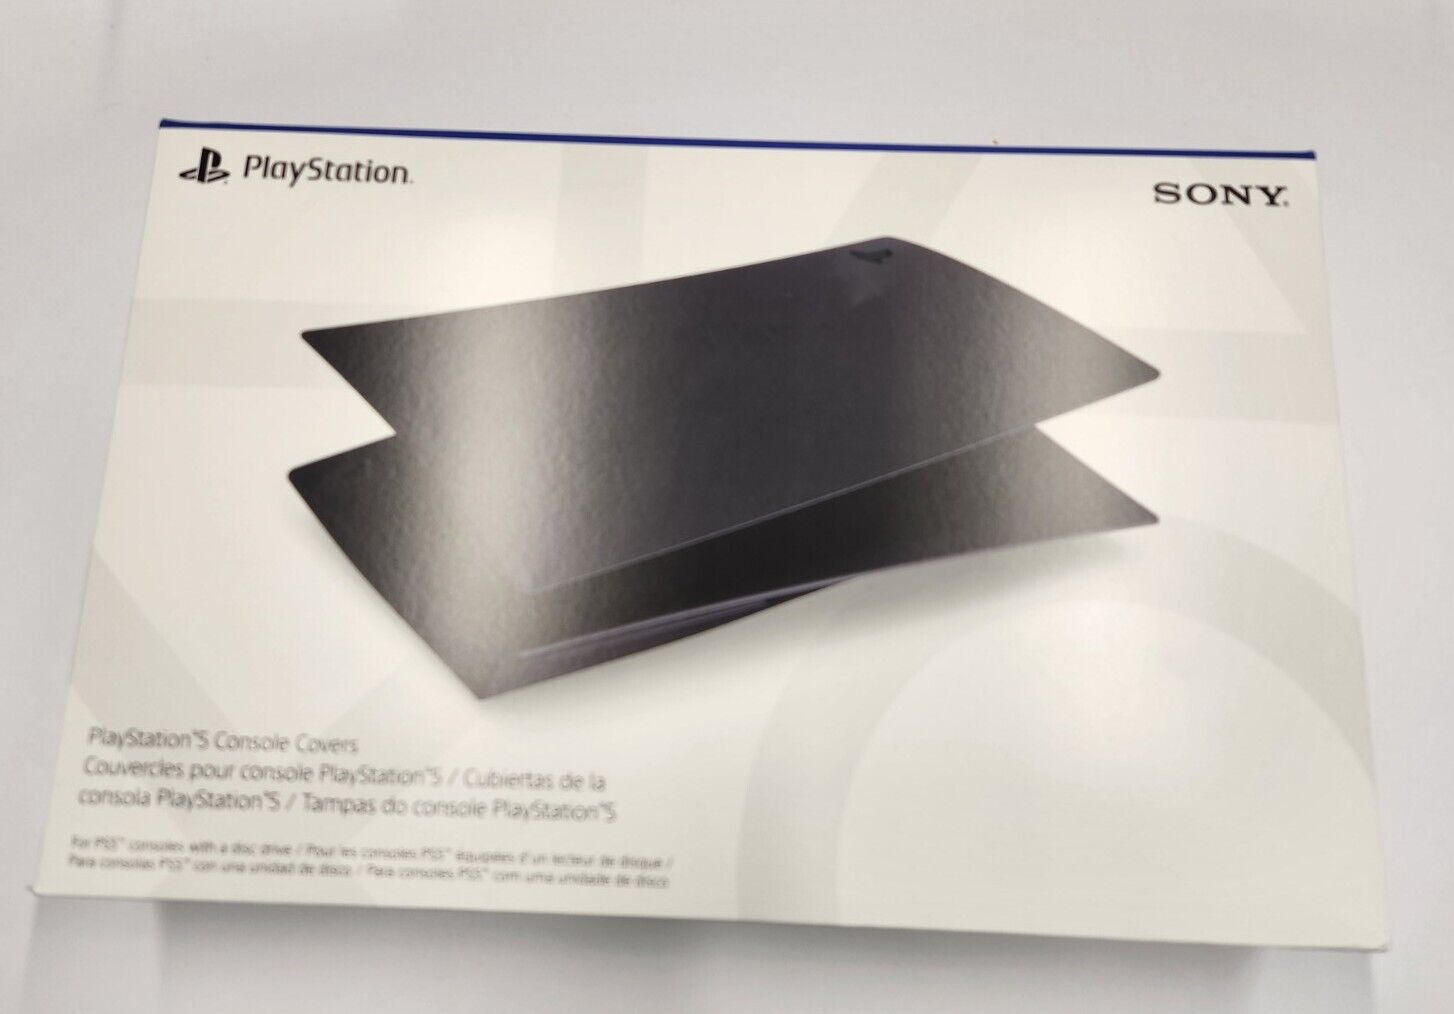  Sony PlayStation 5 Midnight Black Cover [NA]